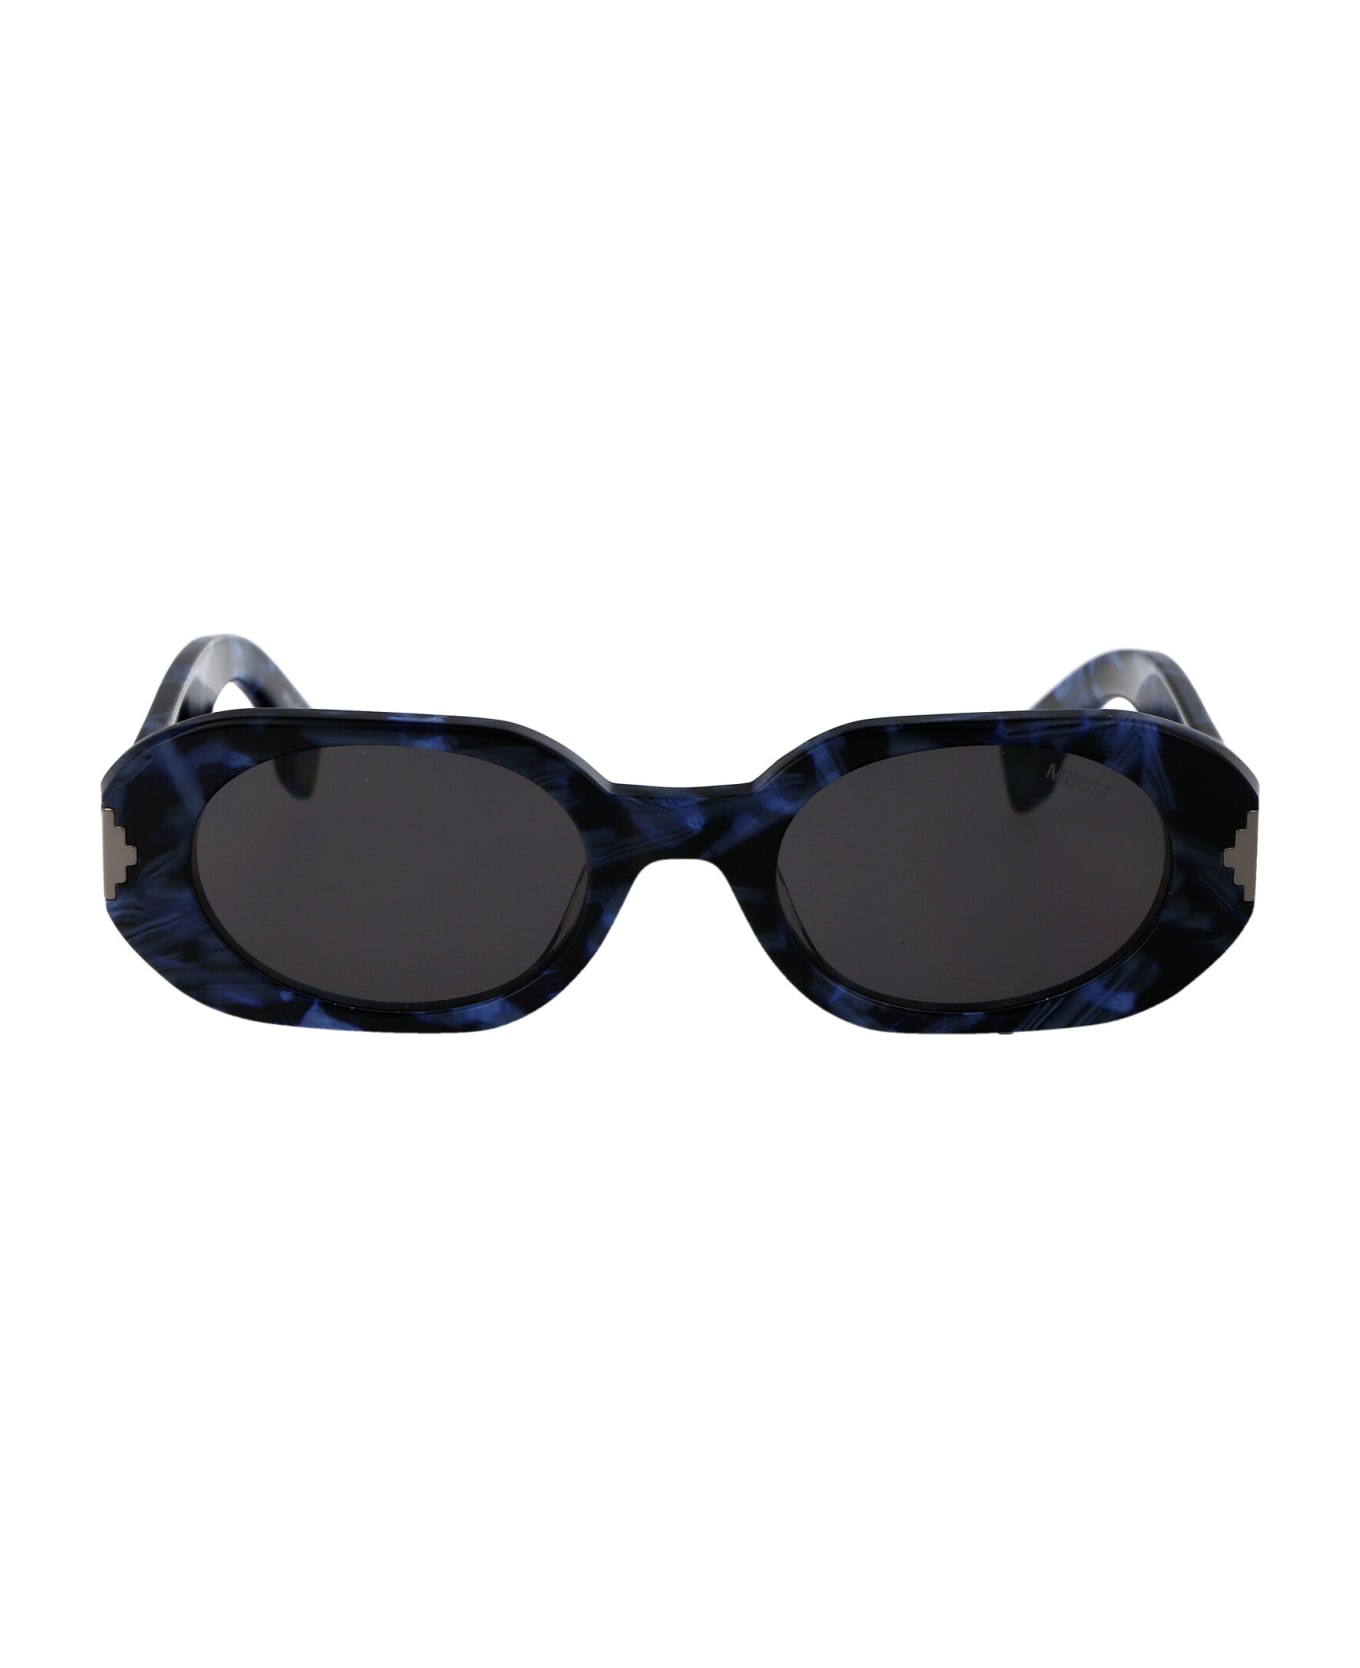 Marcelo Burlon Nire Sunglasses - 4107 HAVANA BLUE   サングラス